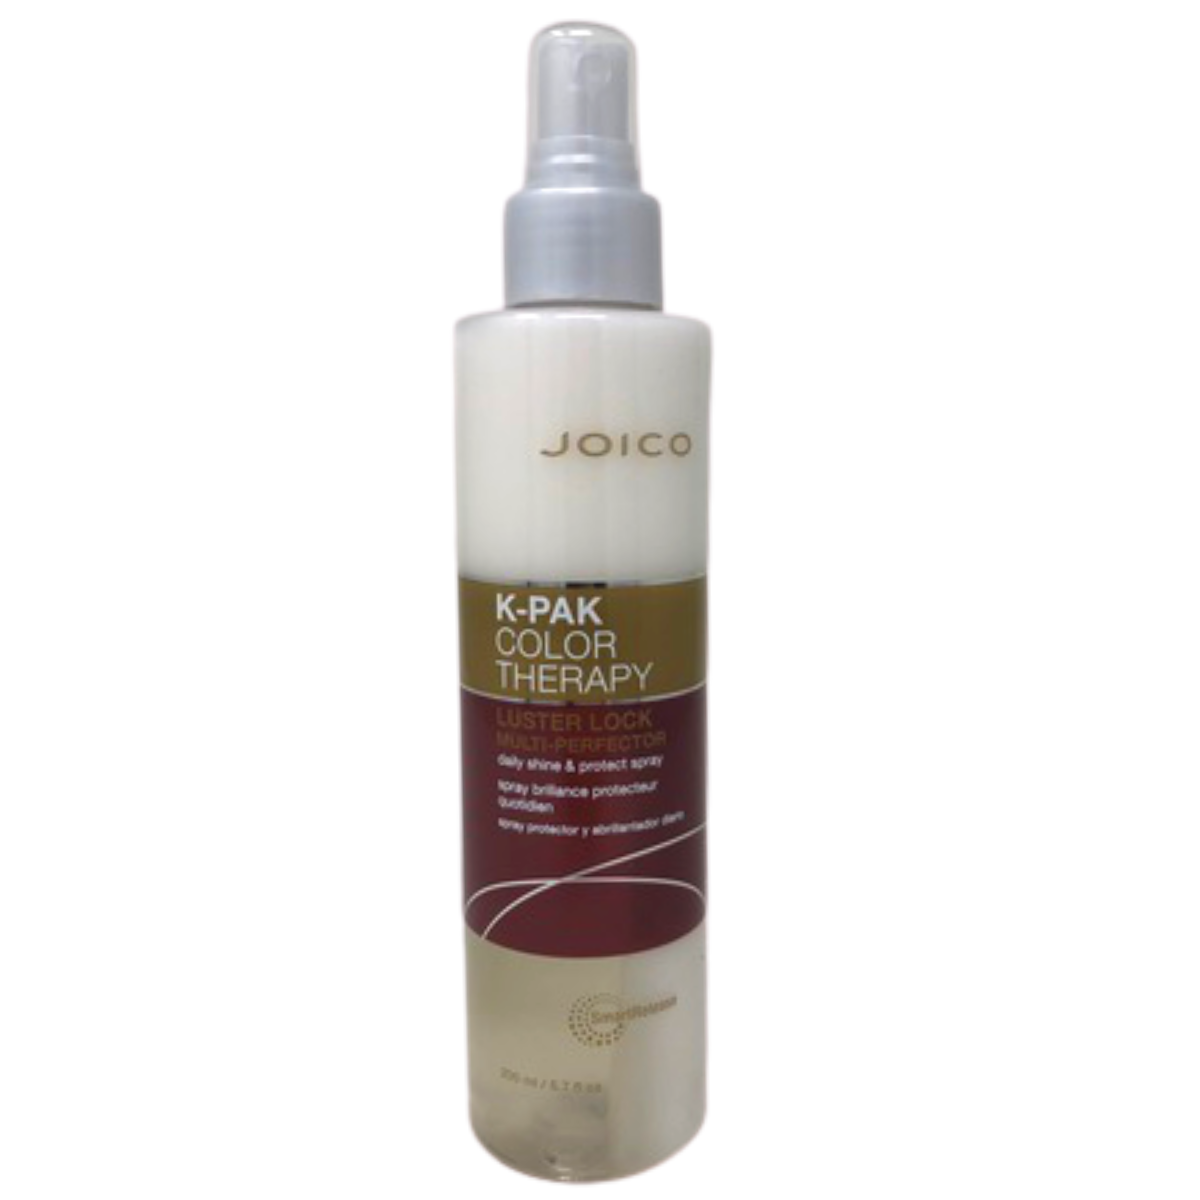 Joico K-Pak Color Therapy Luster Lock Multi-Perfector Daily Shine Spray 6.7 oz